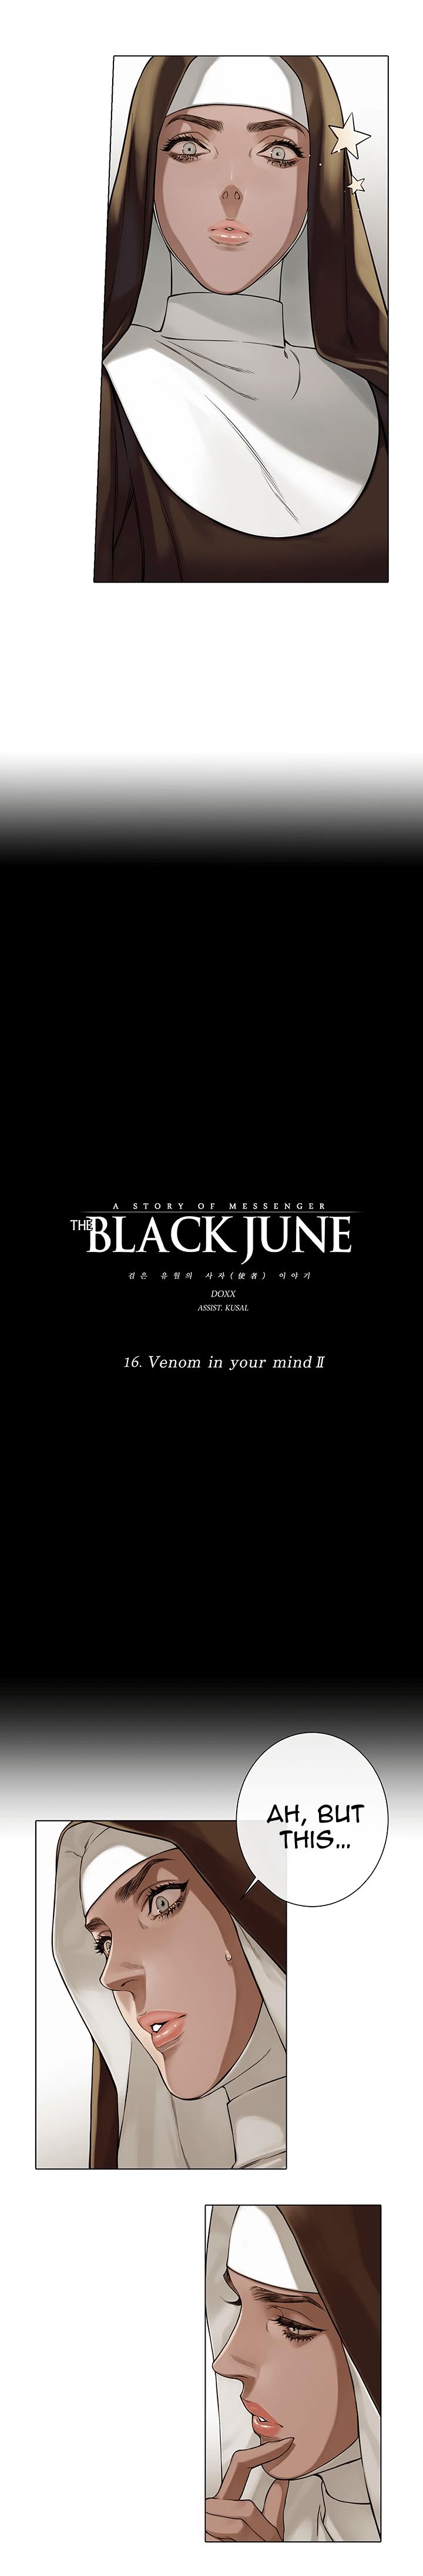 the_black_june_16_5